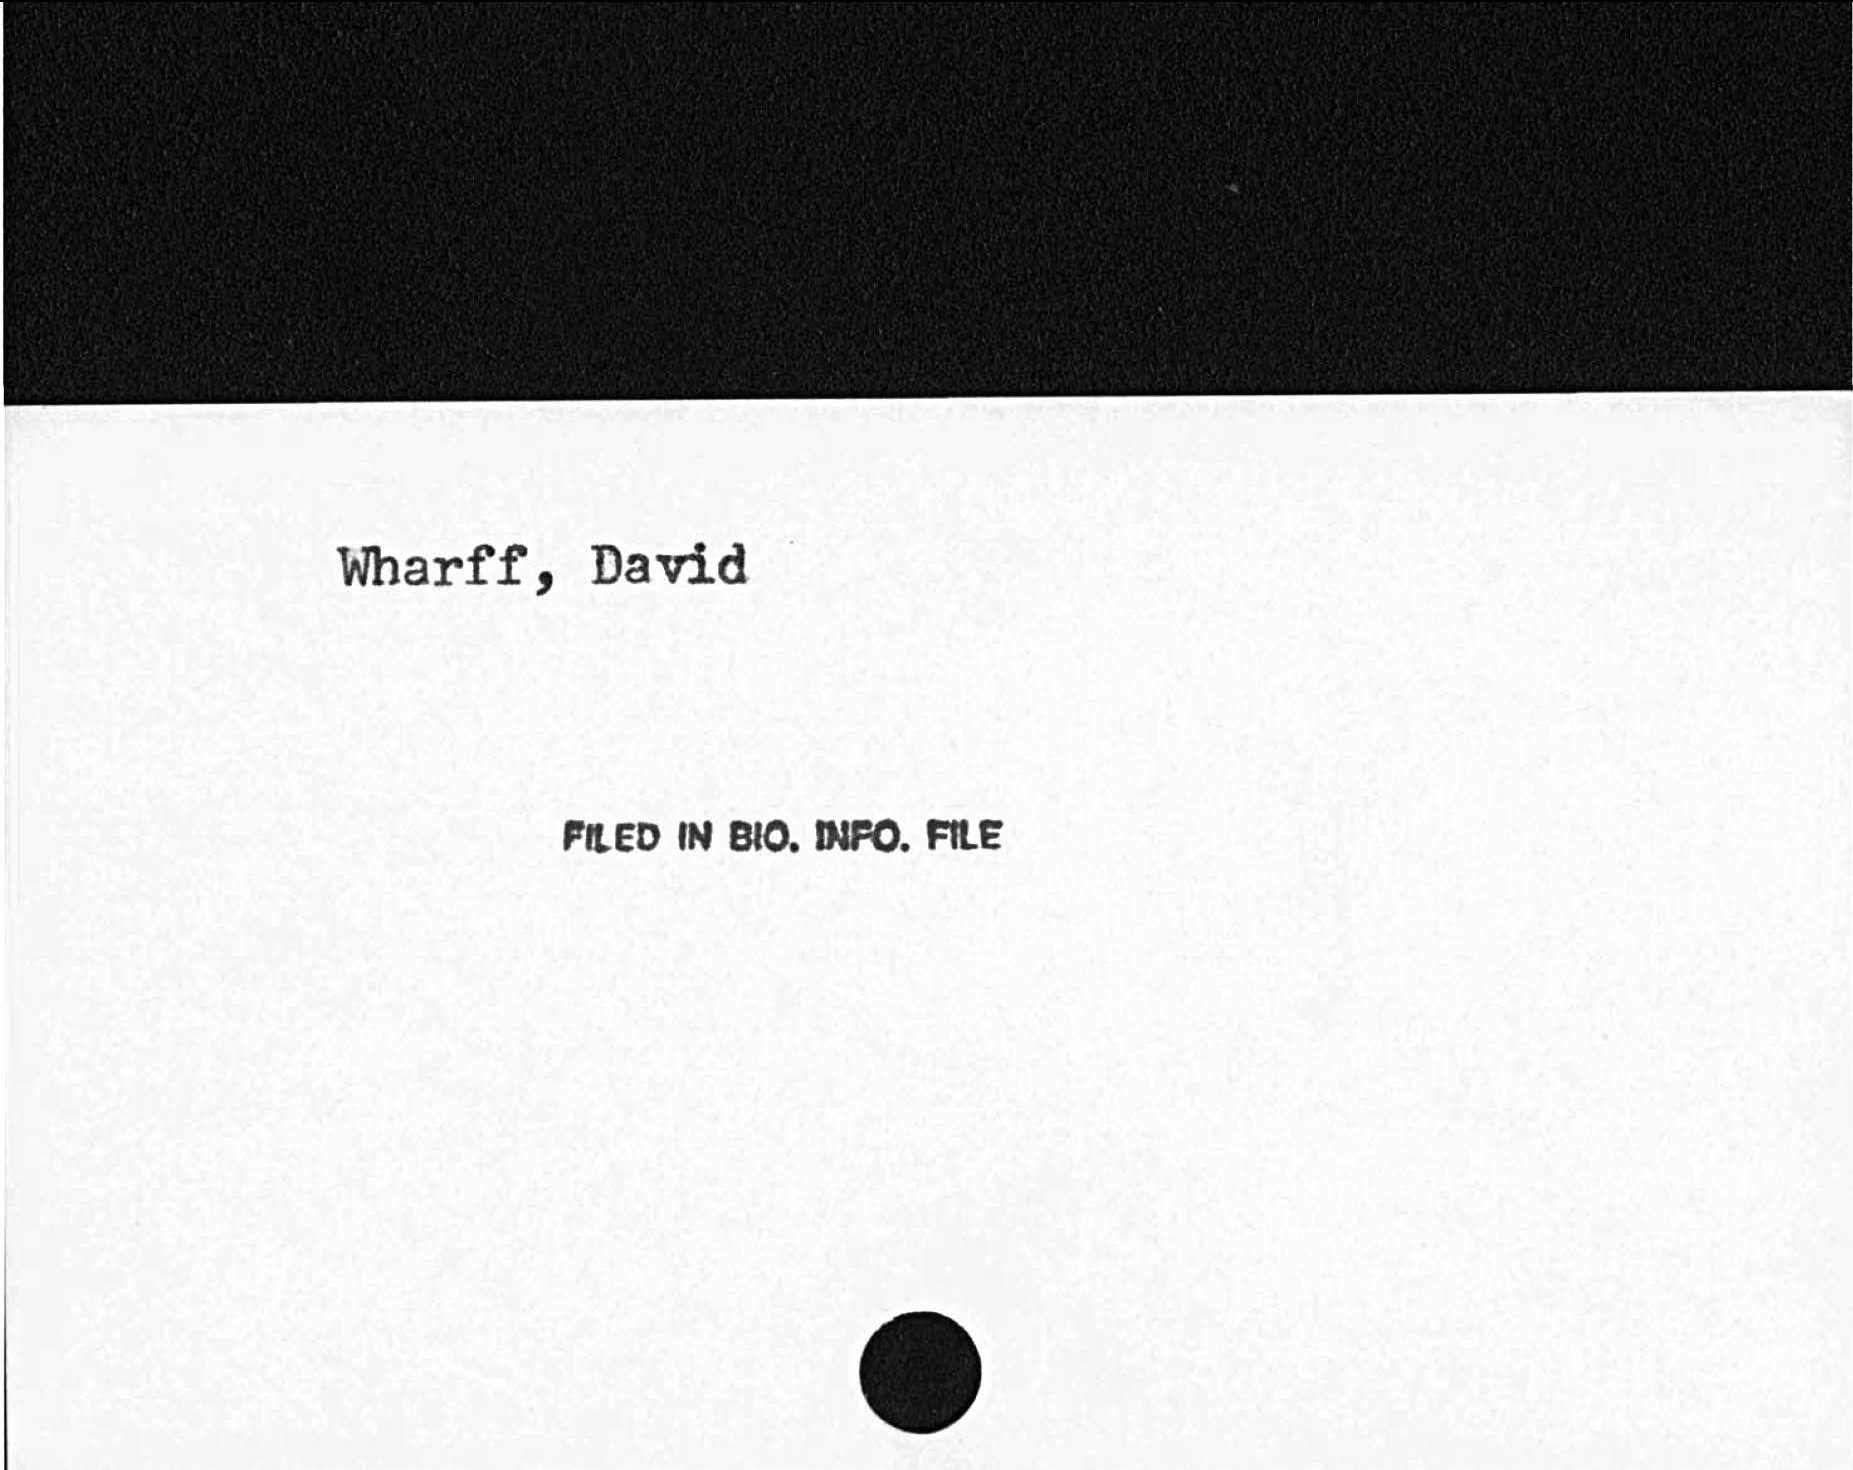 Wharff, DavidFILED IN BIO. INFO. FILED